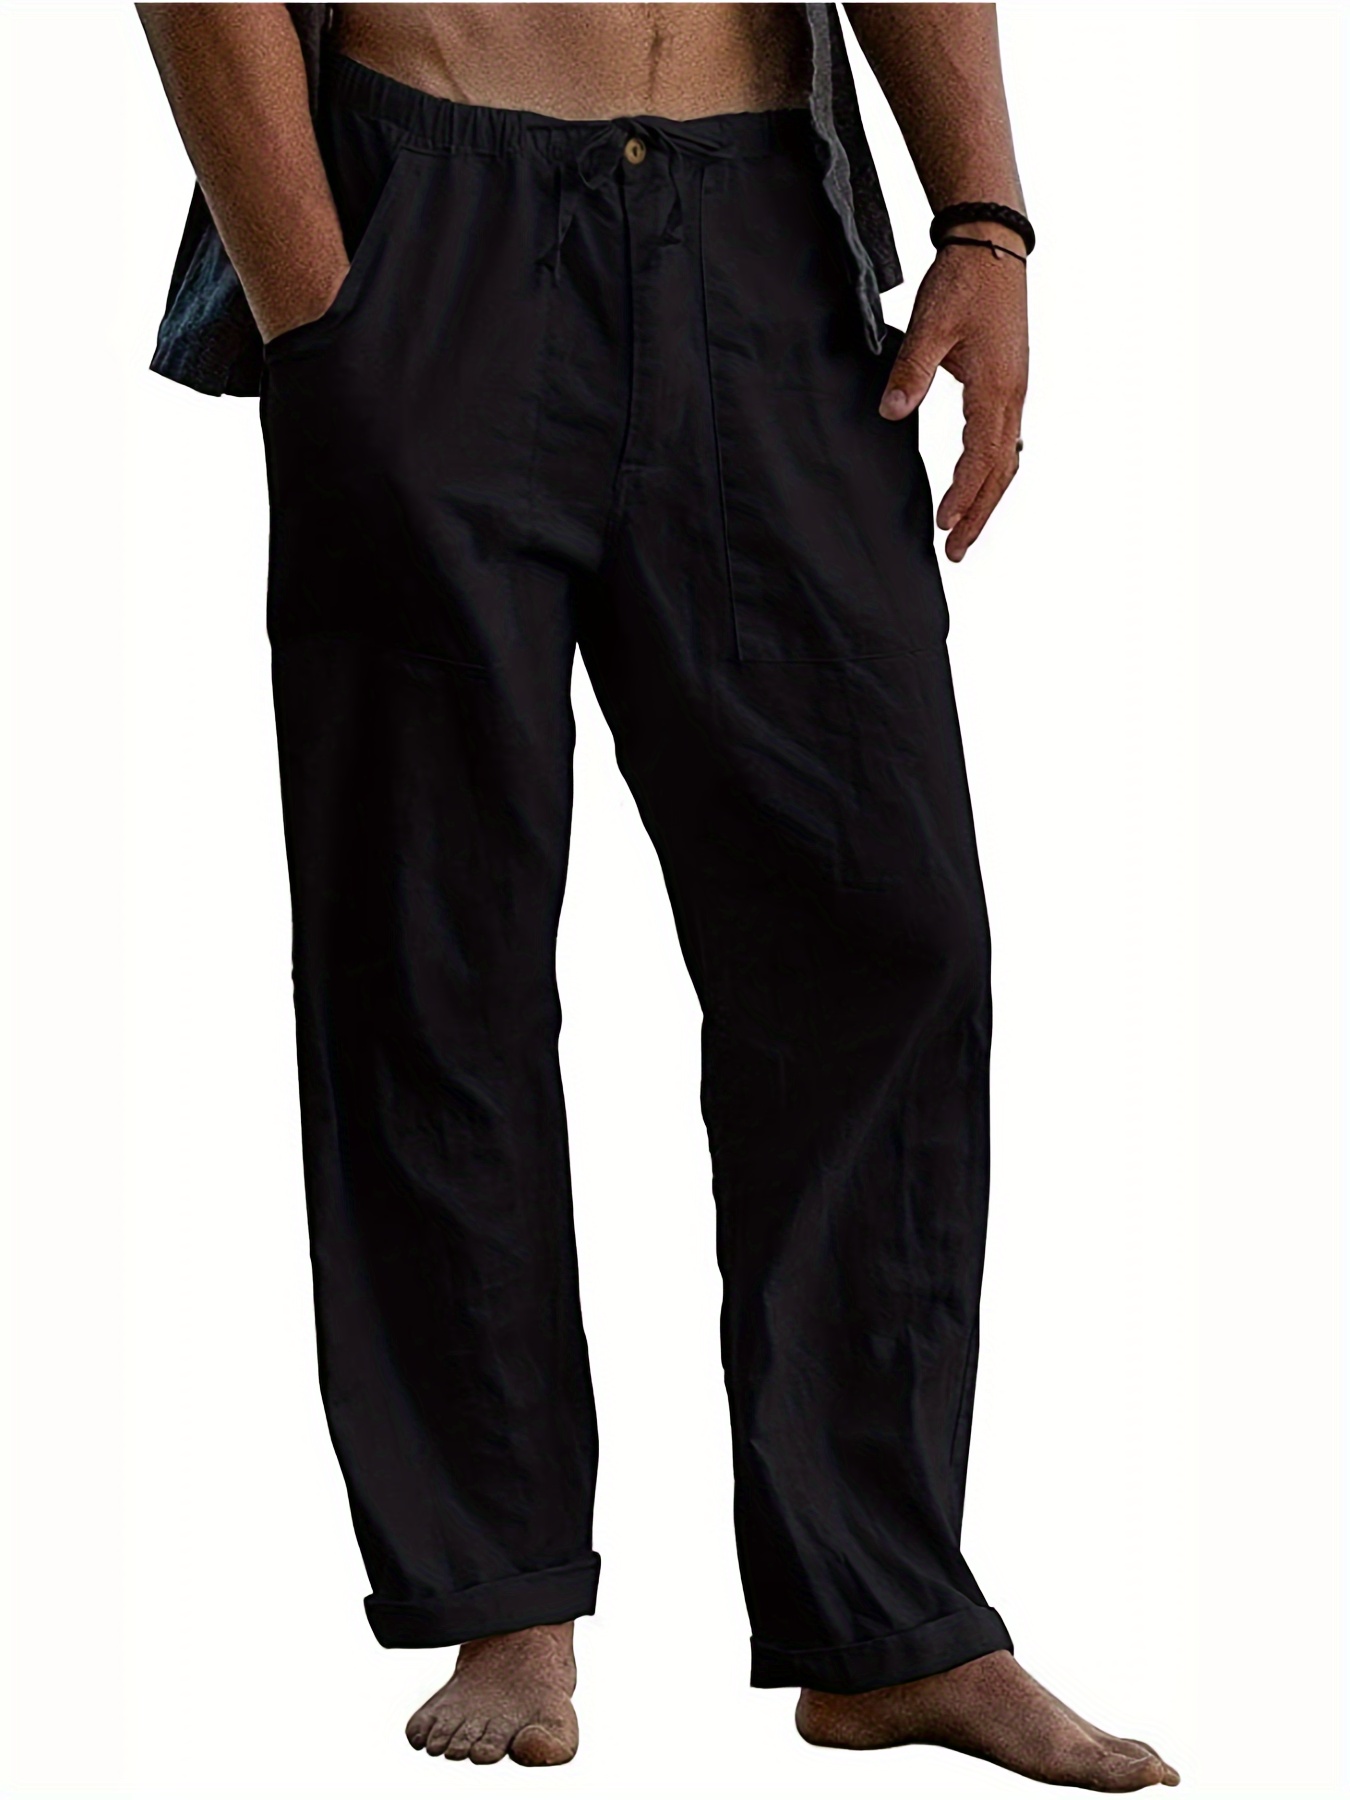 Stylish Men's Cotton Linen Pants with Elastic Waist